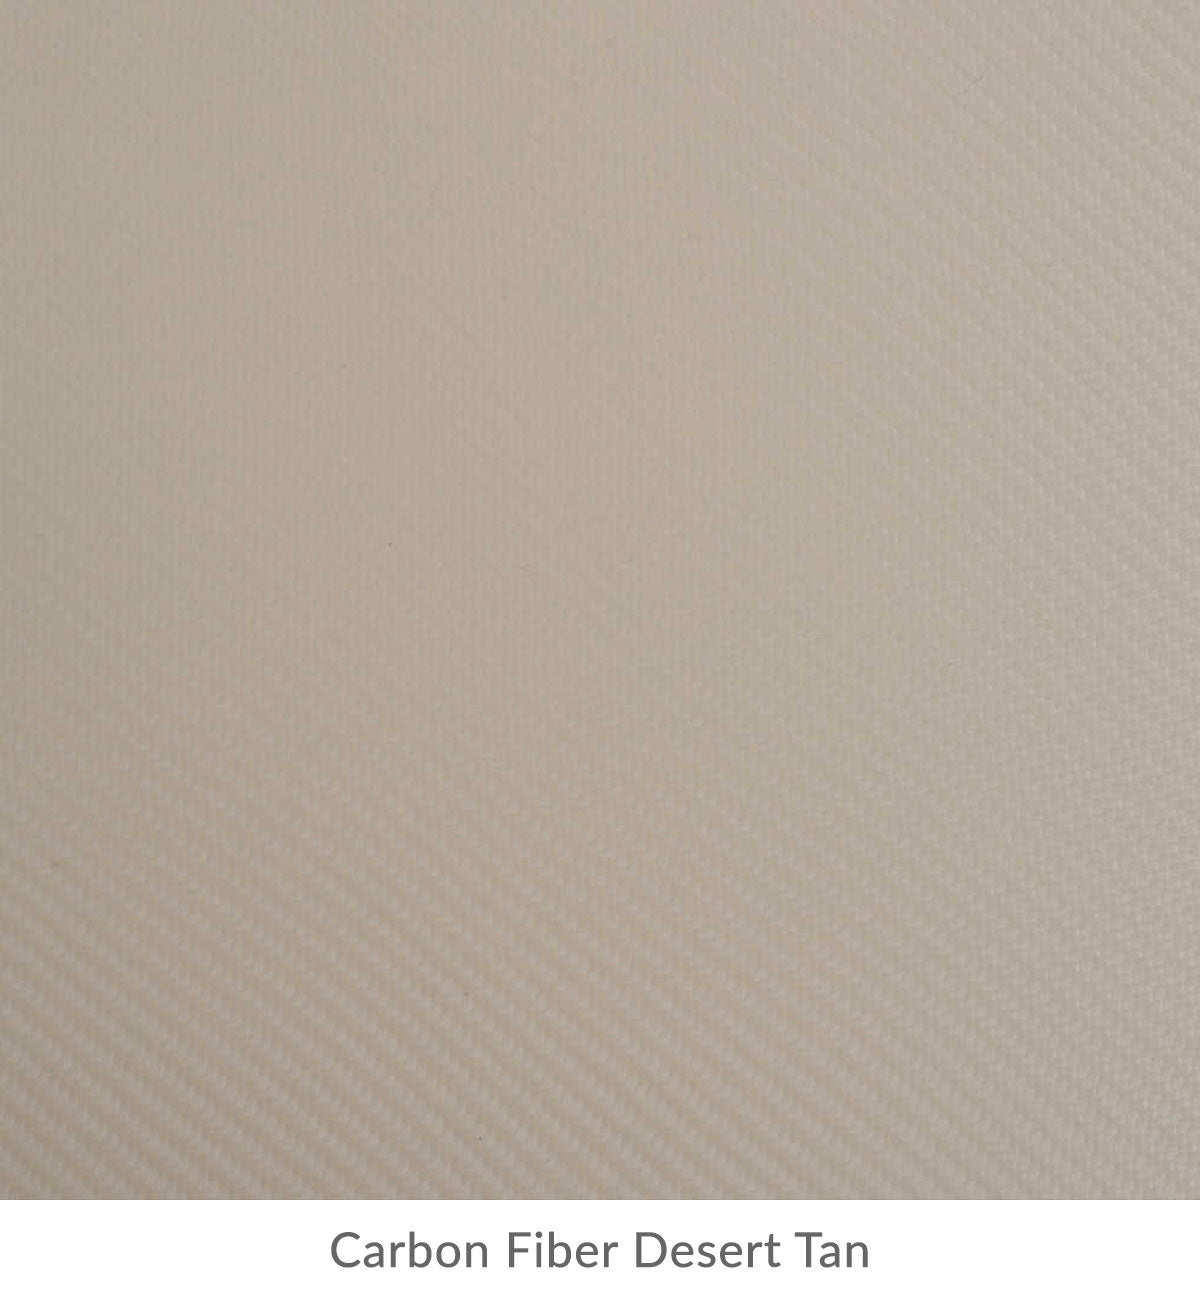 Carbon Fiber Desert Tan